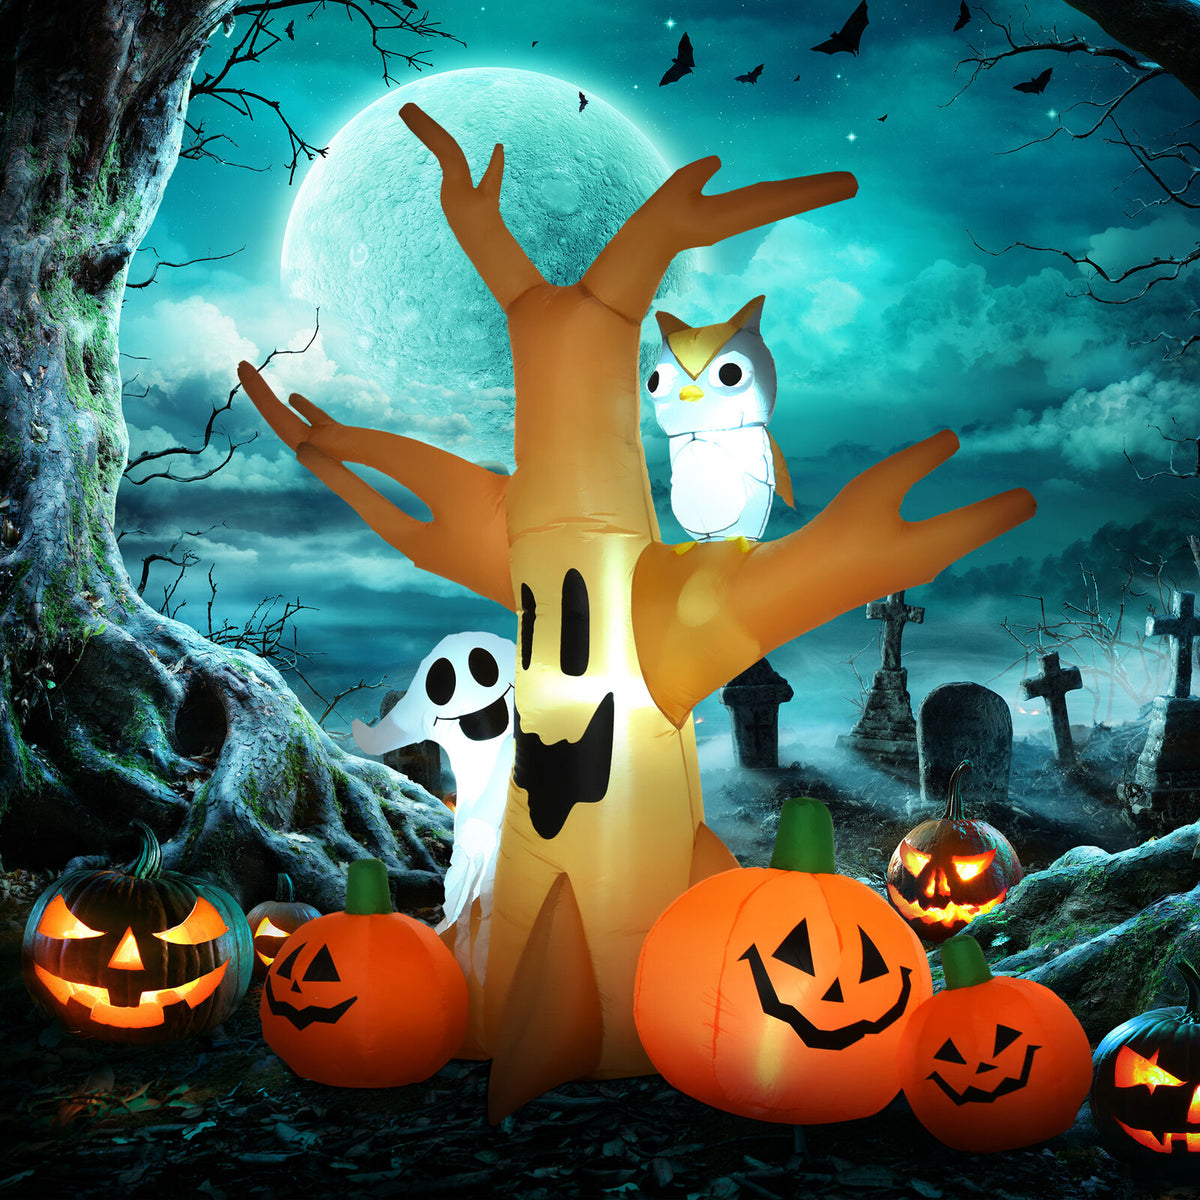 7.5-Foot Inflatable Haunted Halloween Tree With Pumpkin & Ghost Design